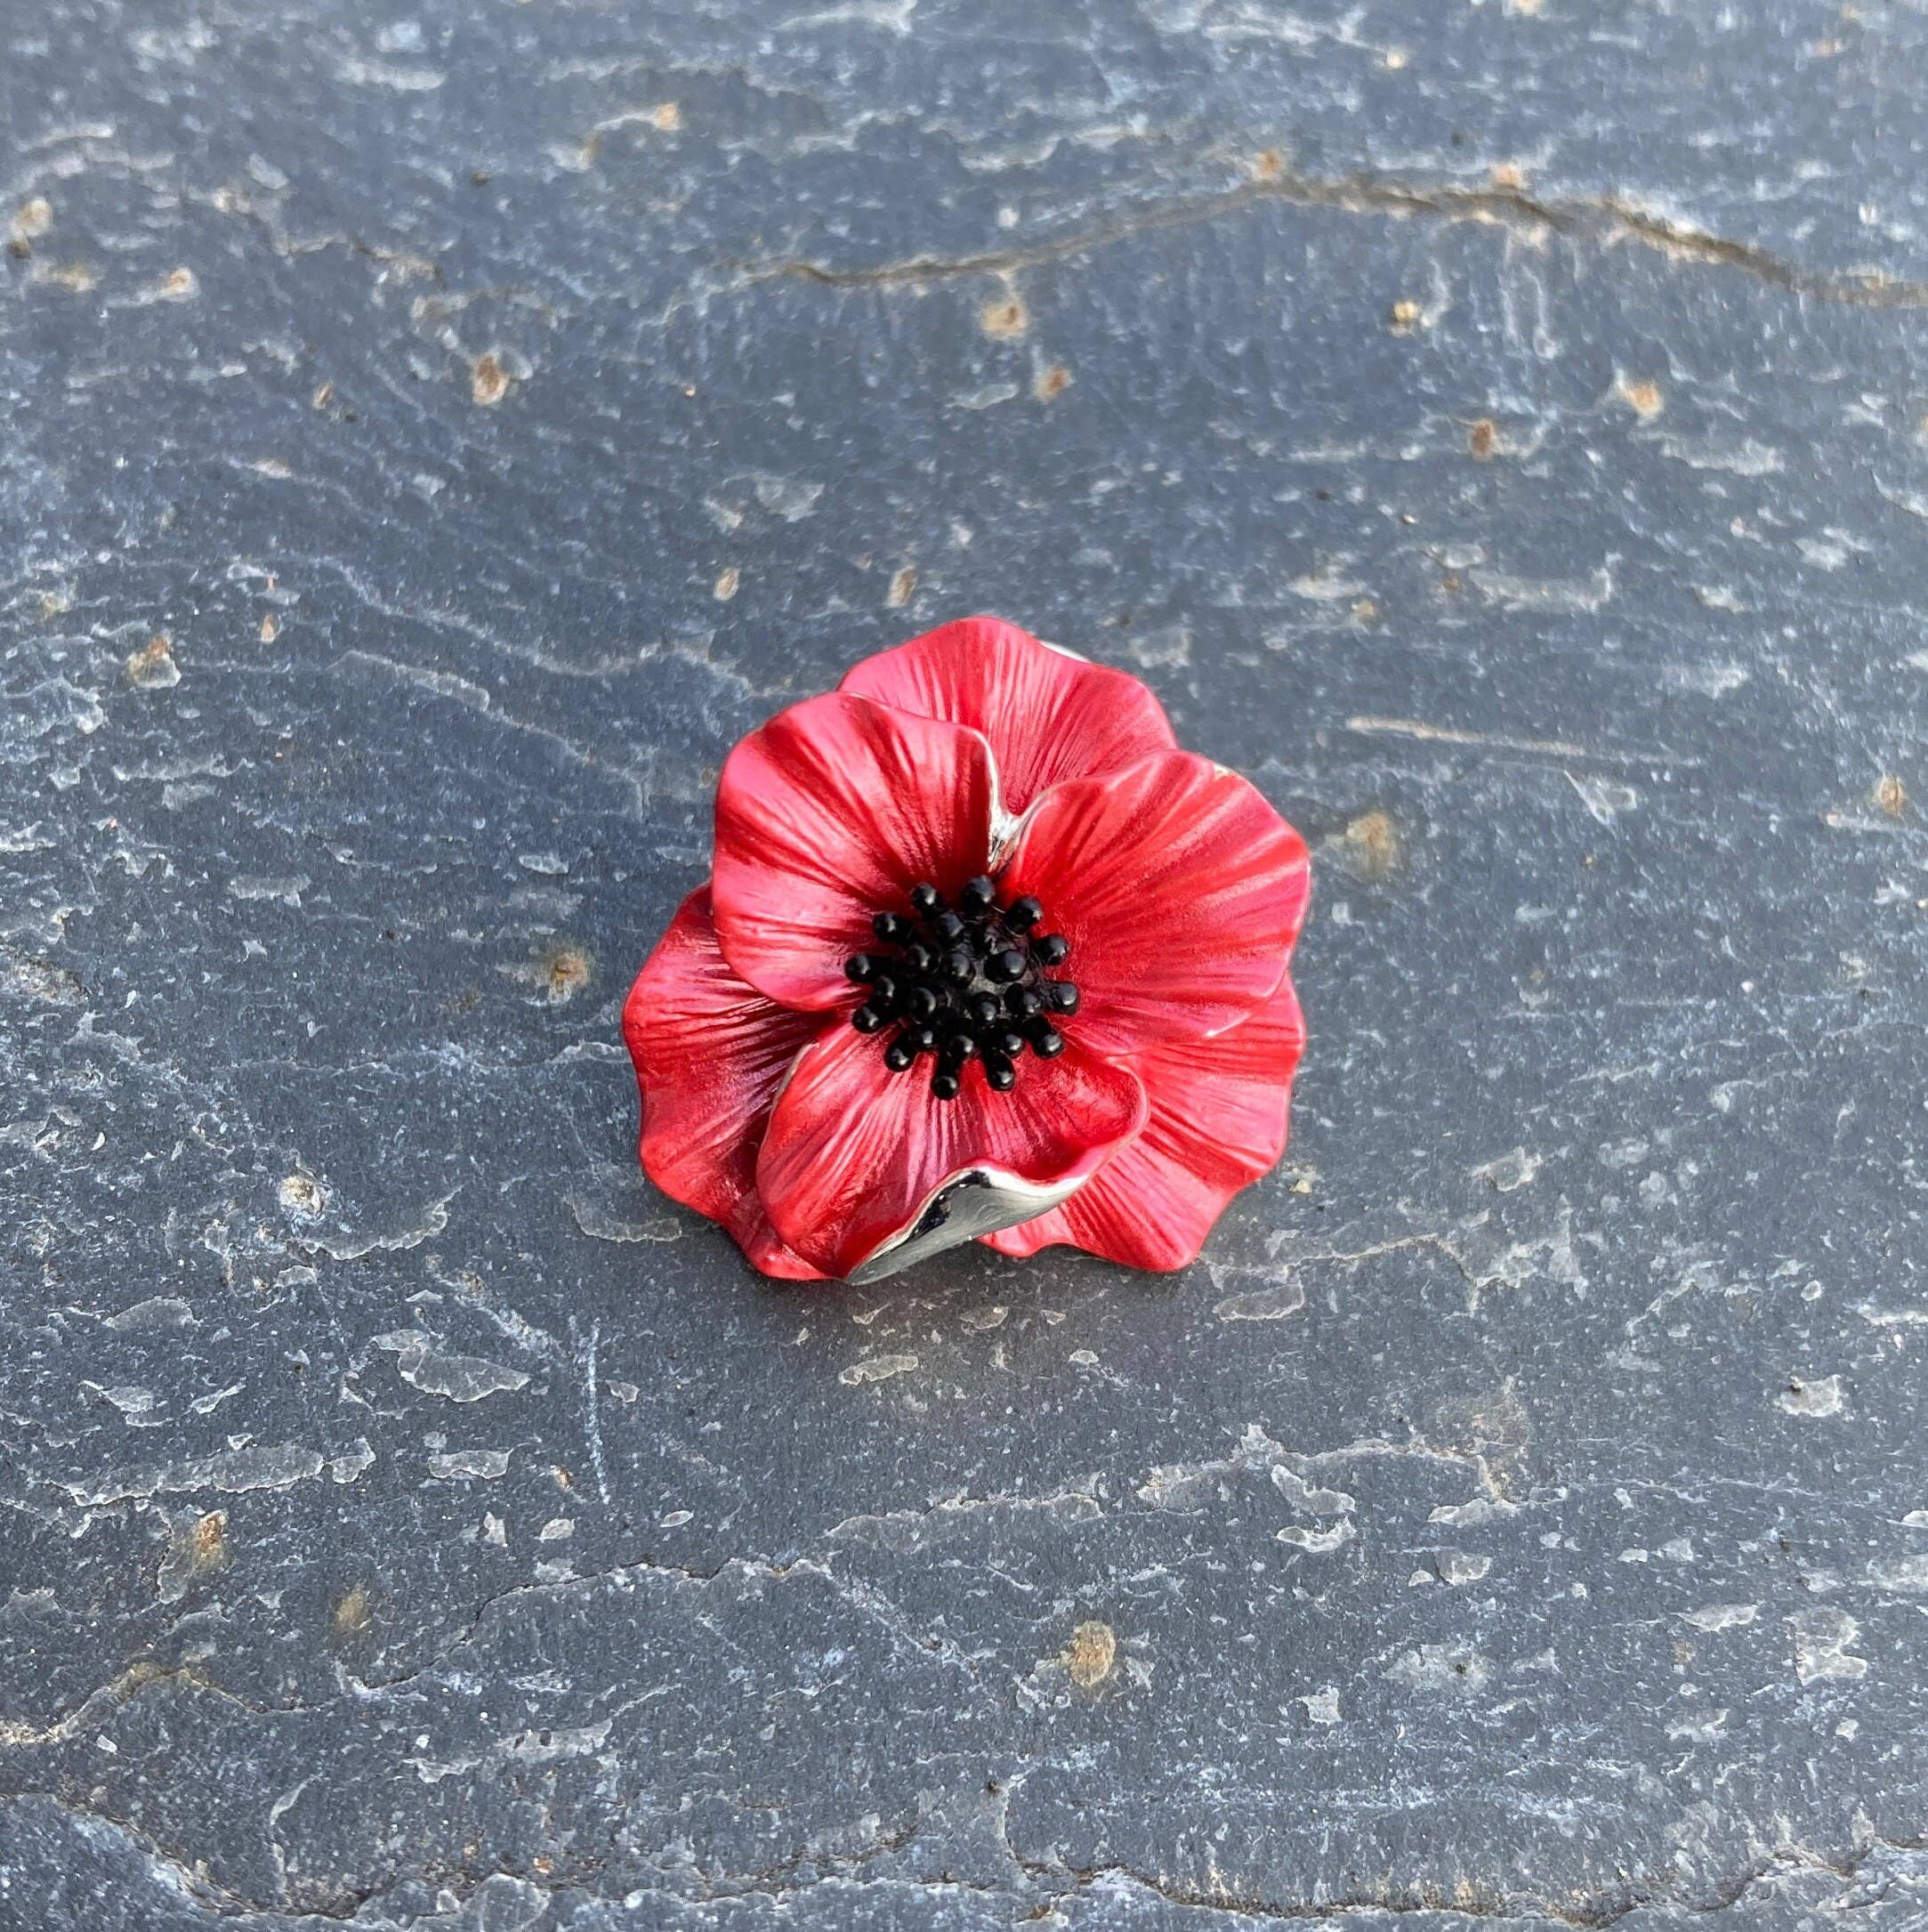 Poppy Red Flower Pin Lapel Brooch